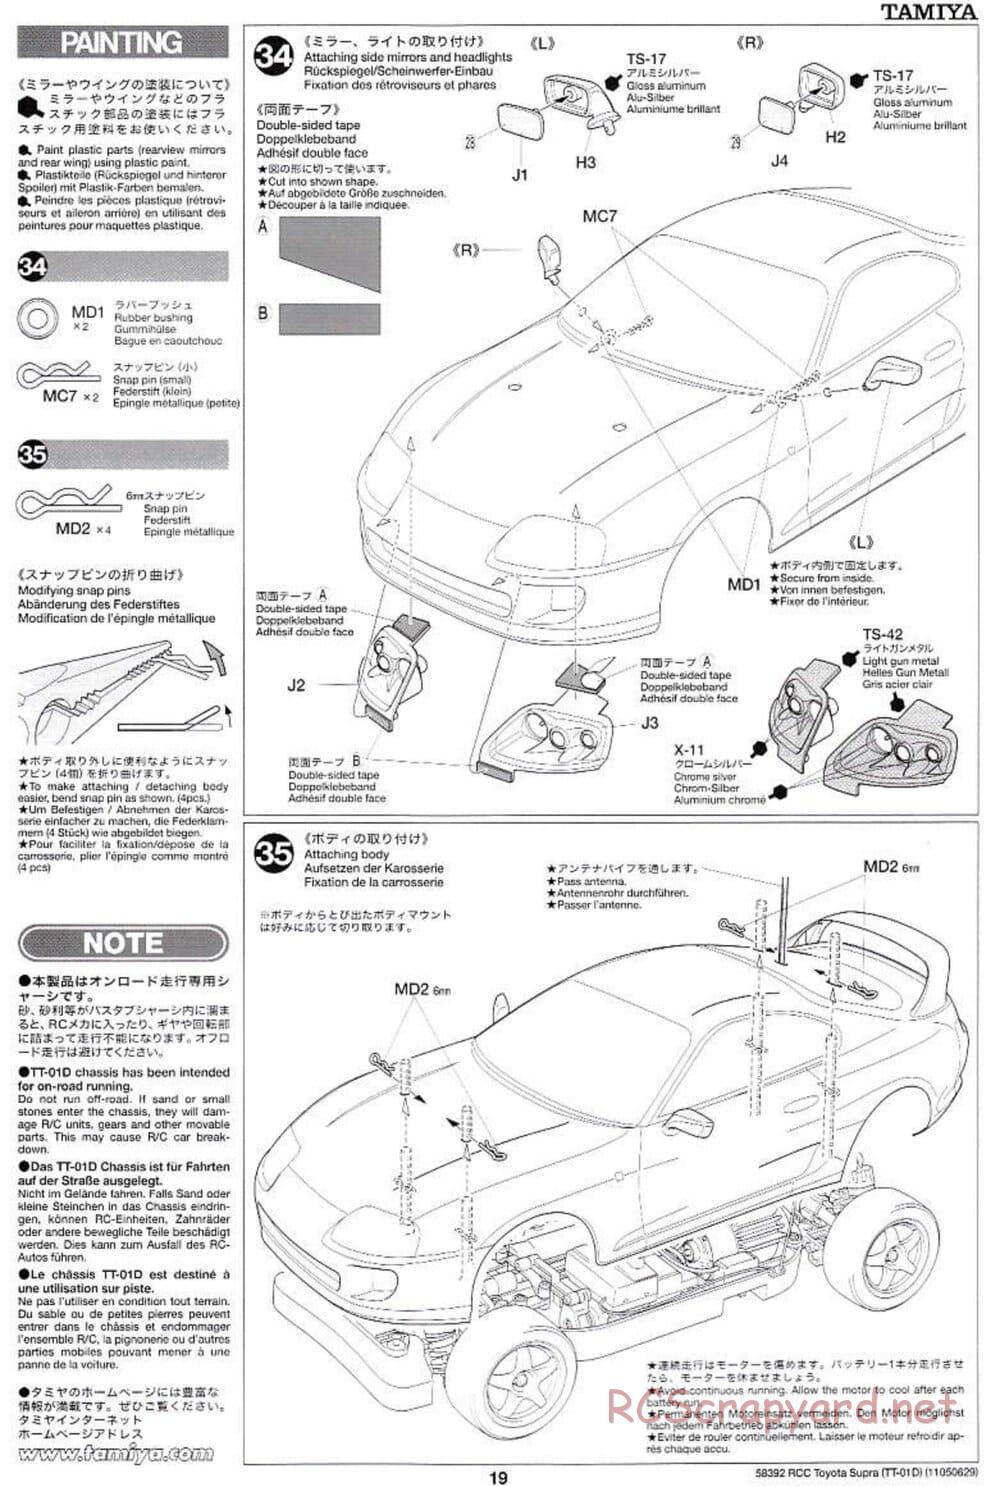 Tamiya - Toyota Supra - Drift Spec - TT-01D Chassis - Manual - Page 19